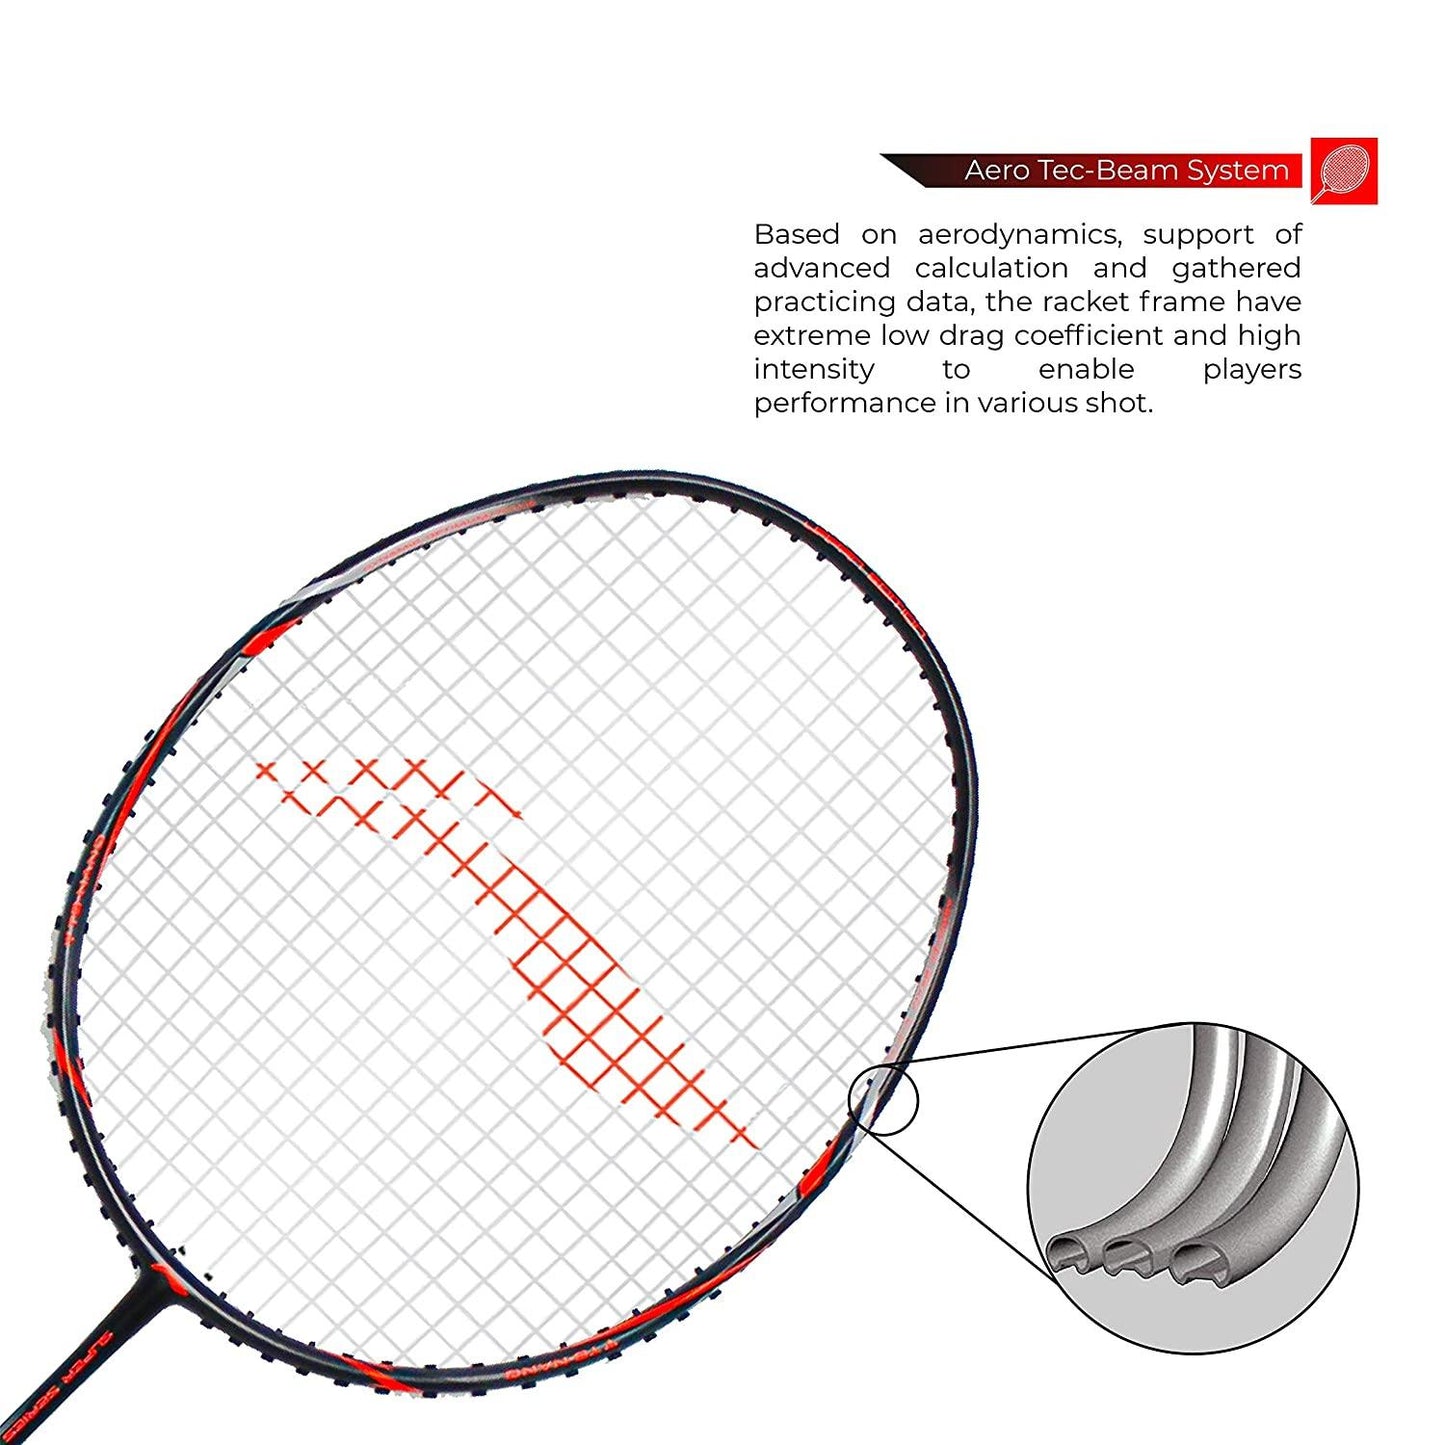 Li-Ning Super Series 2020 - (Strung) Graphite Badminton Racquet - Black/Orange - Best Price online Prokicksports.com